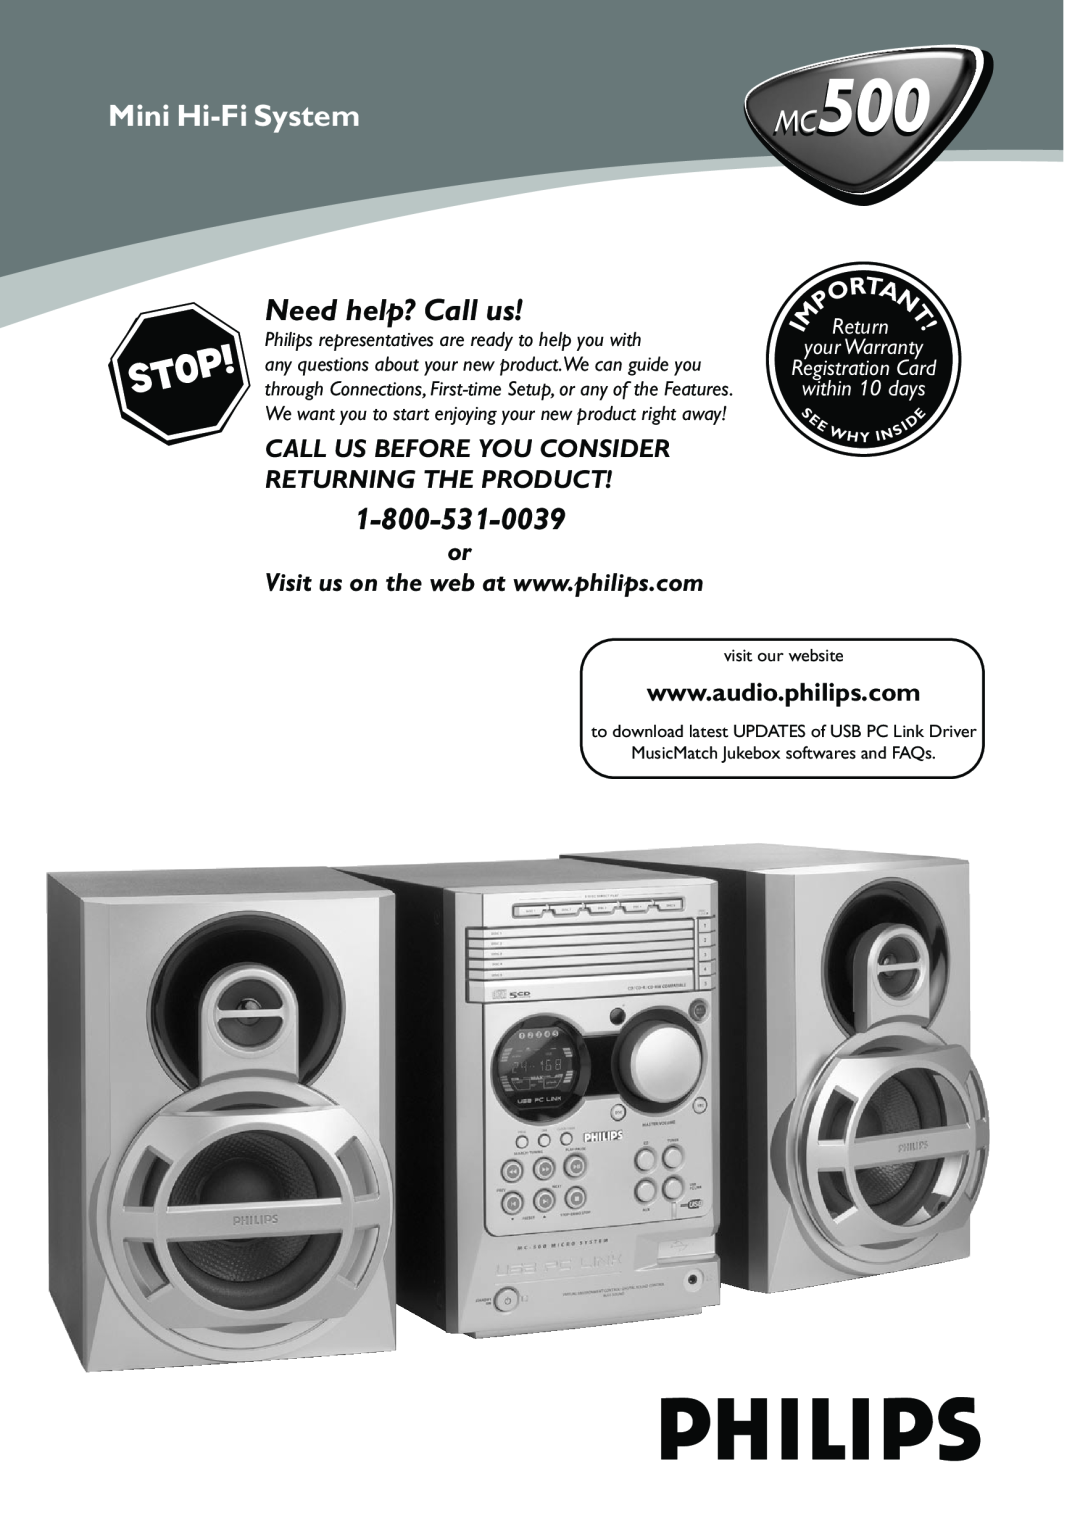 Philips MC-500 warranty Need help? Call us, MC500, Mini Hi-FiSystem, Call Us Before You Consider Returning The Product 